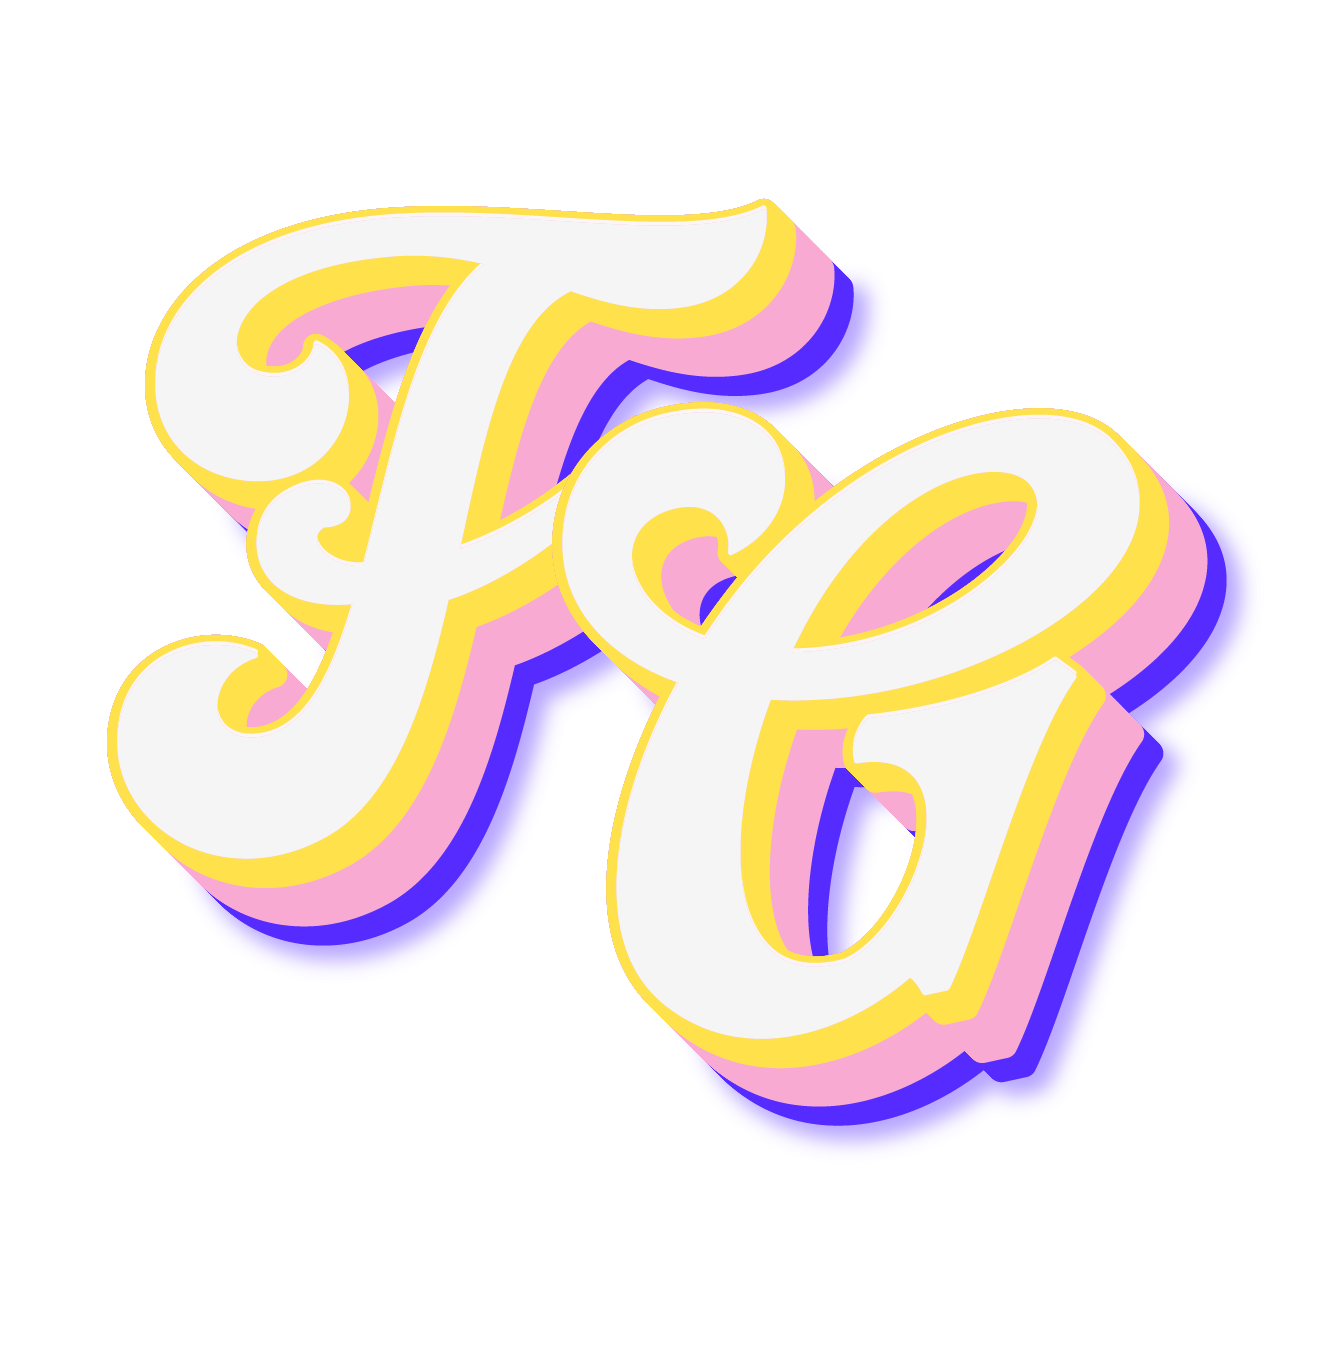 FeelGud logo